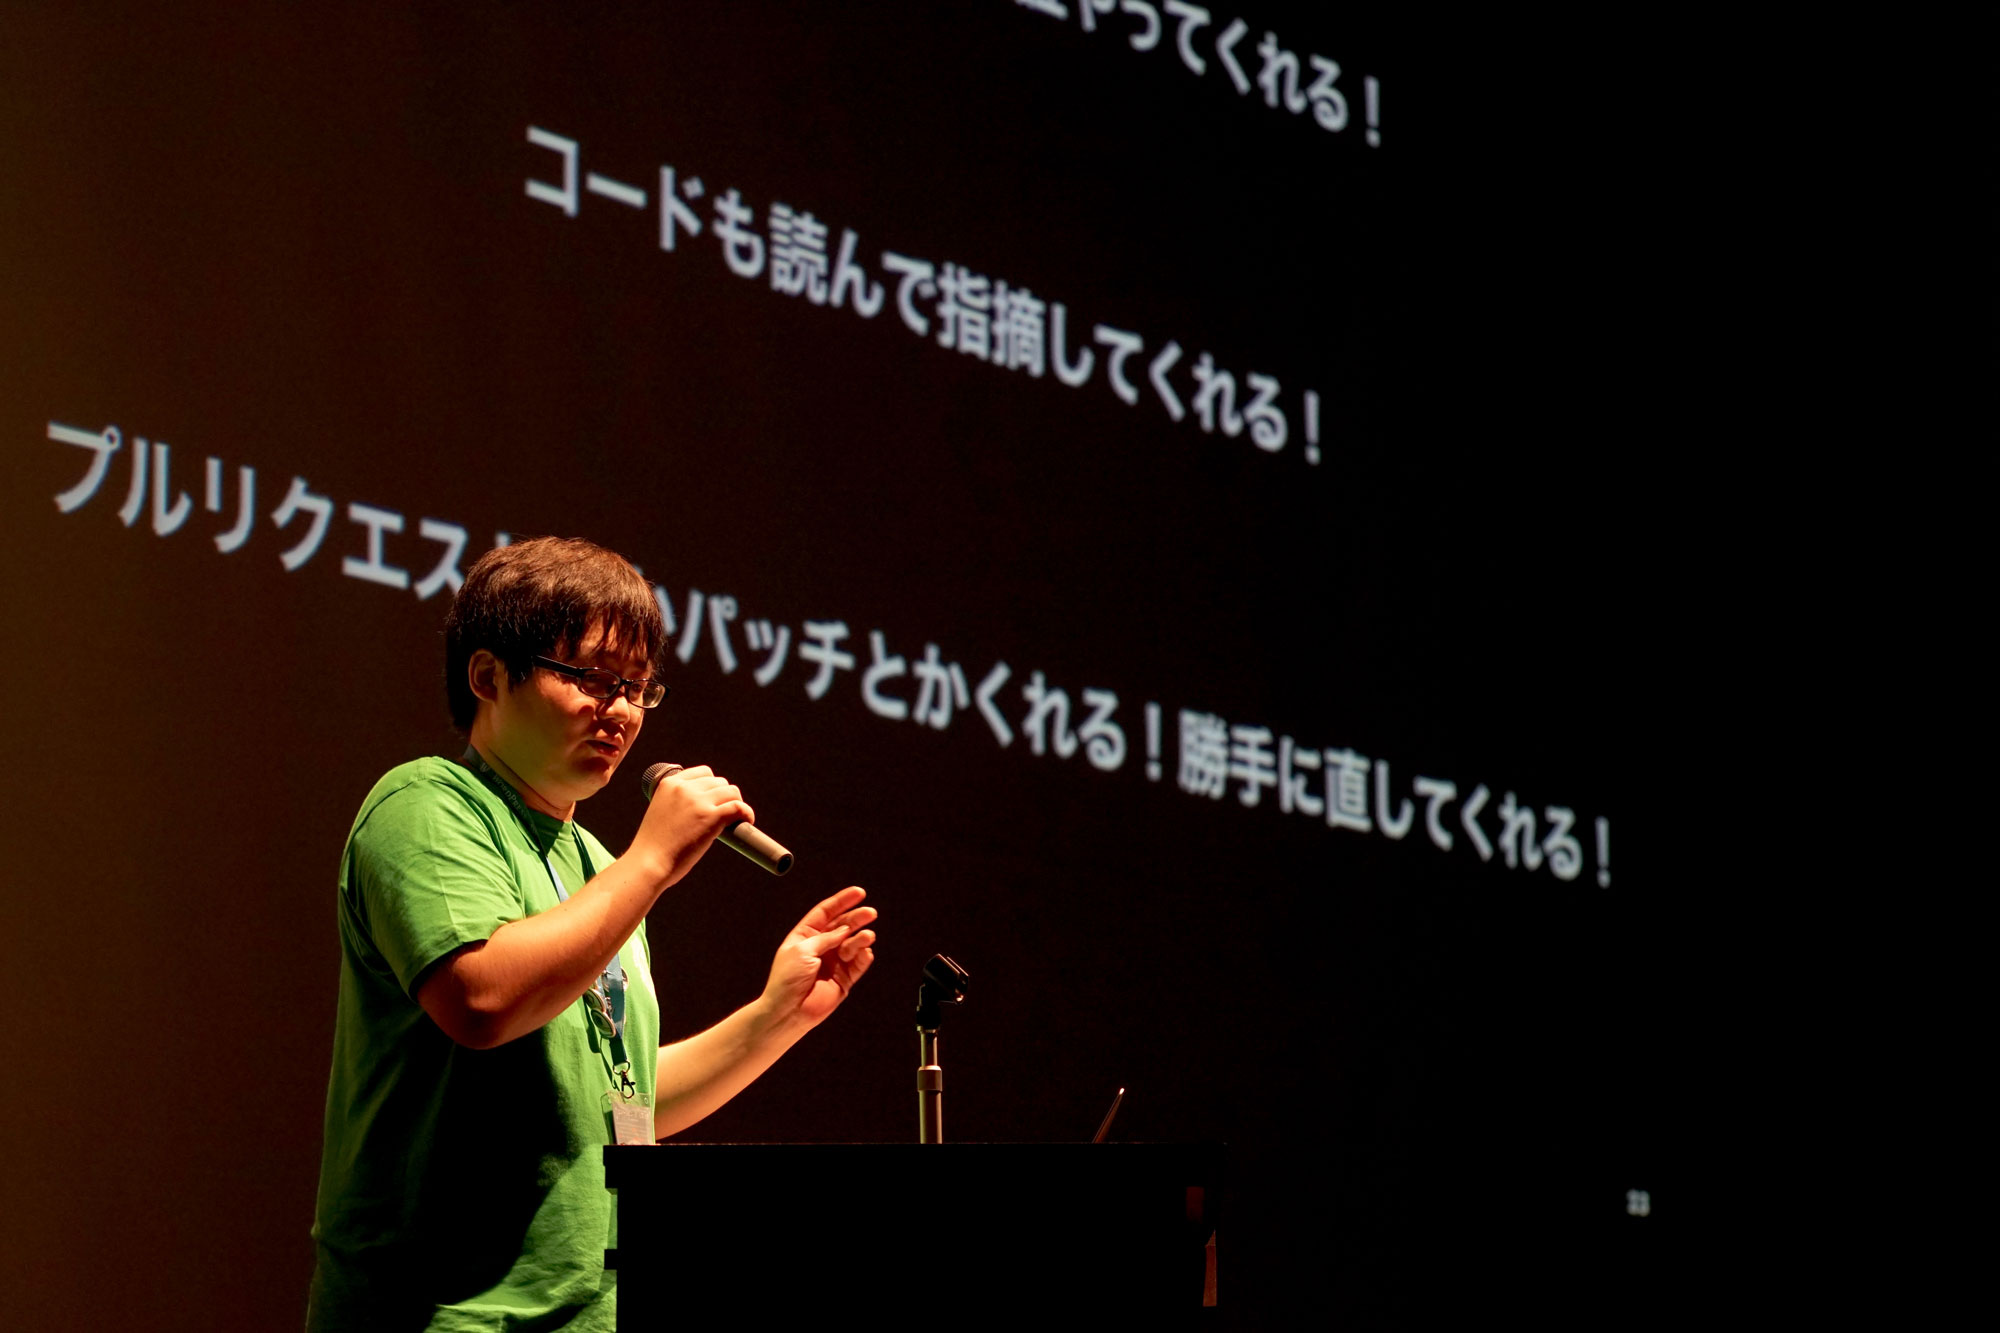 WordCamp Kansai 2016 でオープンソースの楽しさみたいな話をしてきました。